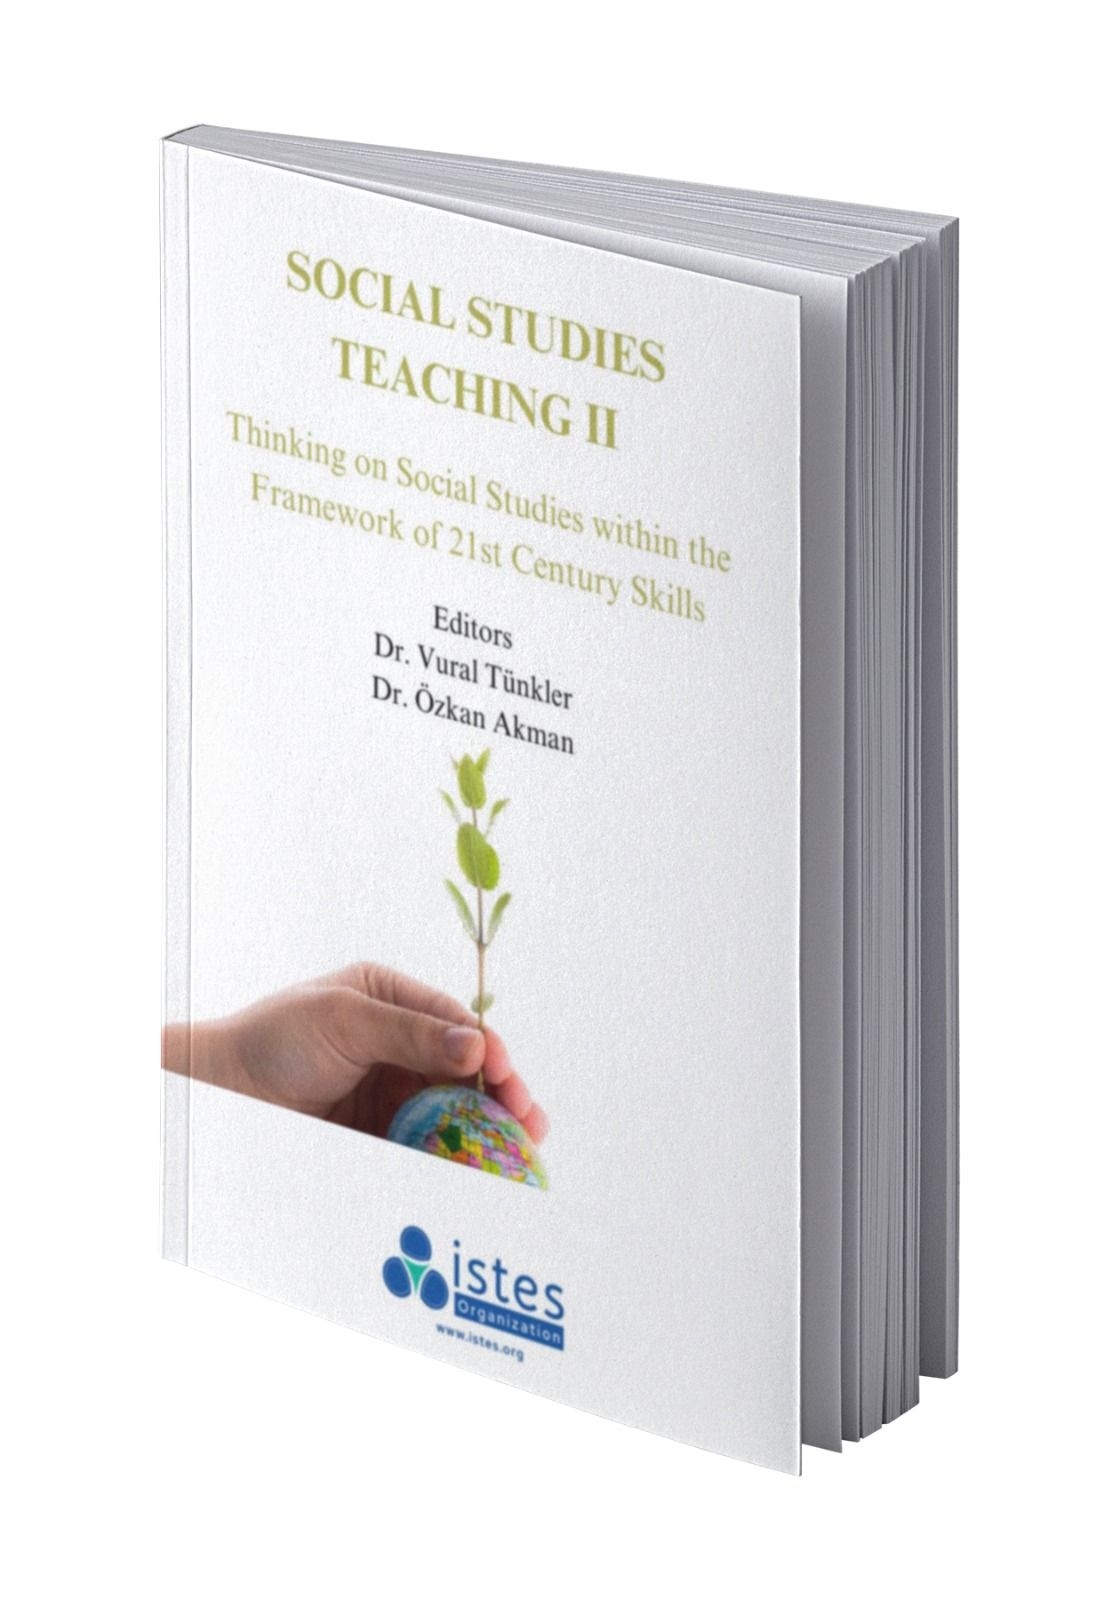 SOCIAL STUDIES TEACHING II: Thinking on Social Studies within the Framework of 21st Century Skills